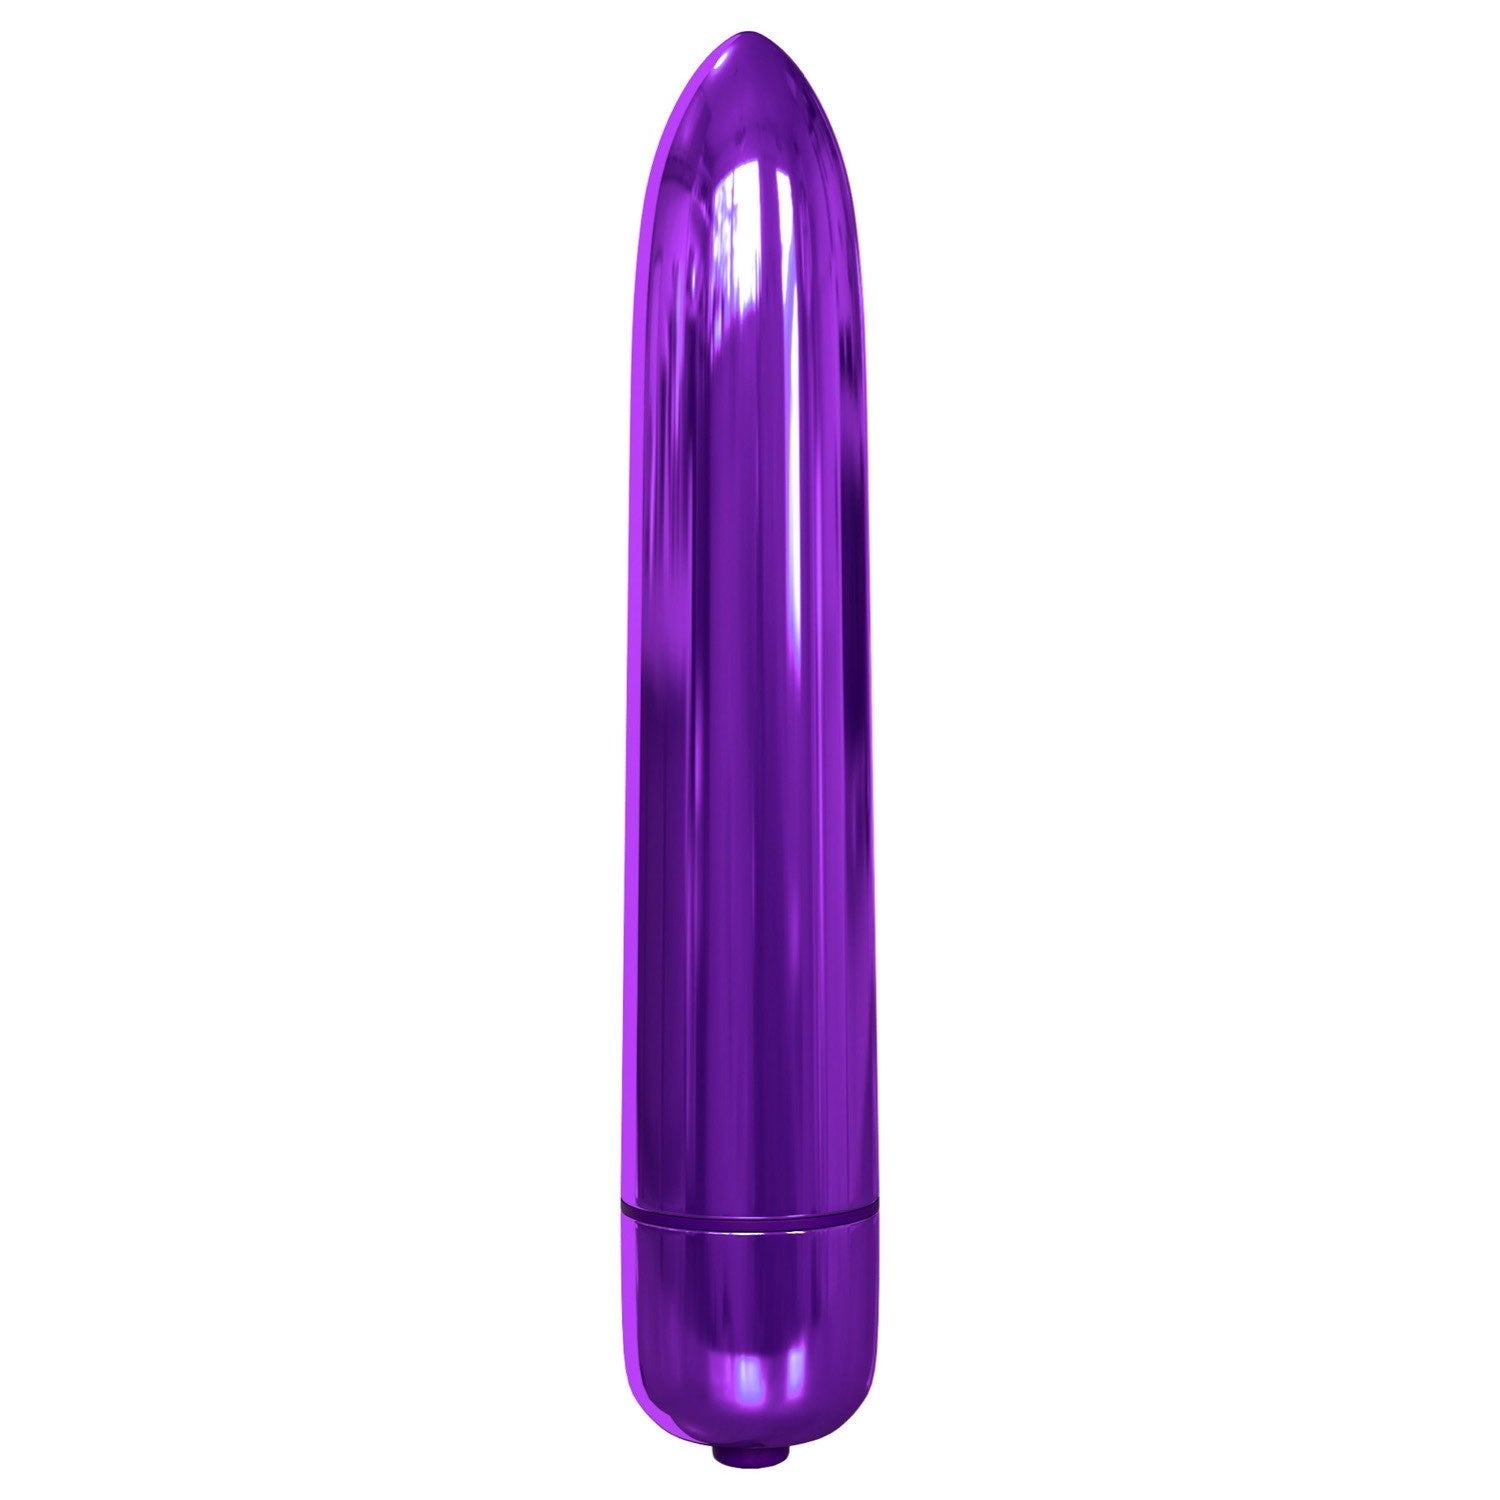 Classix Rocket Bullet - Metallic Purple 8.9 cm Bullet by Pipedream